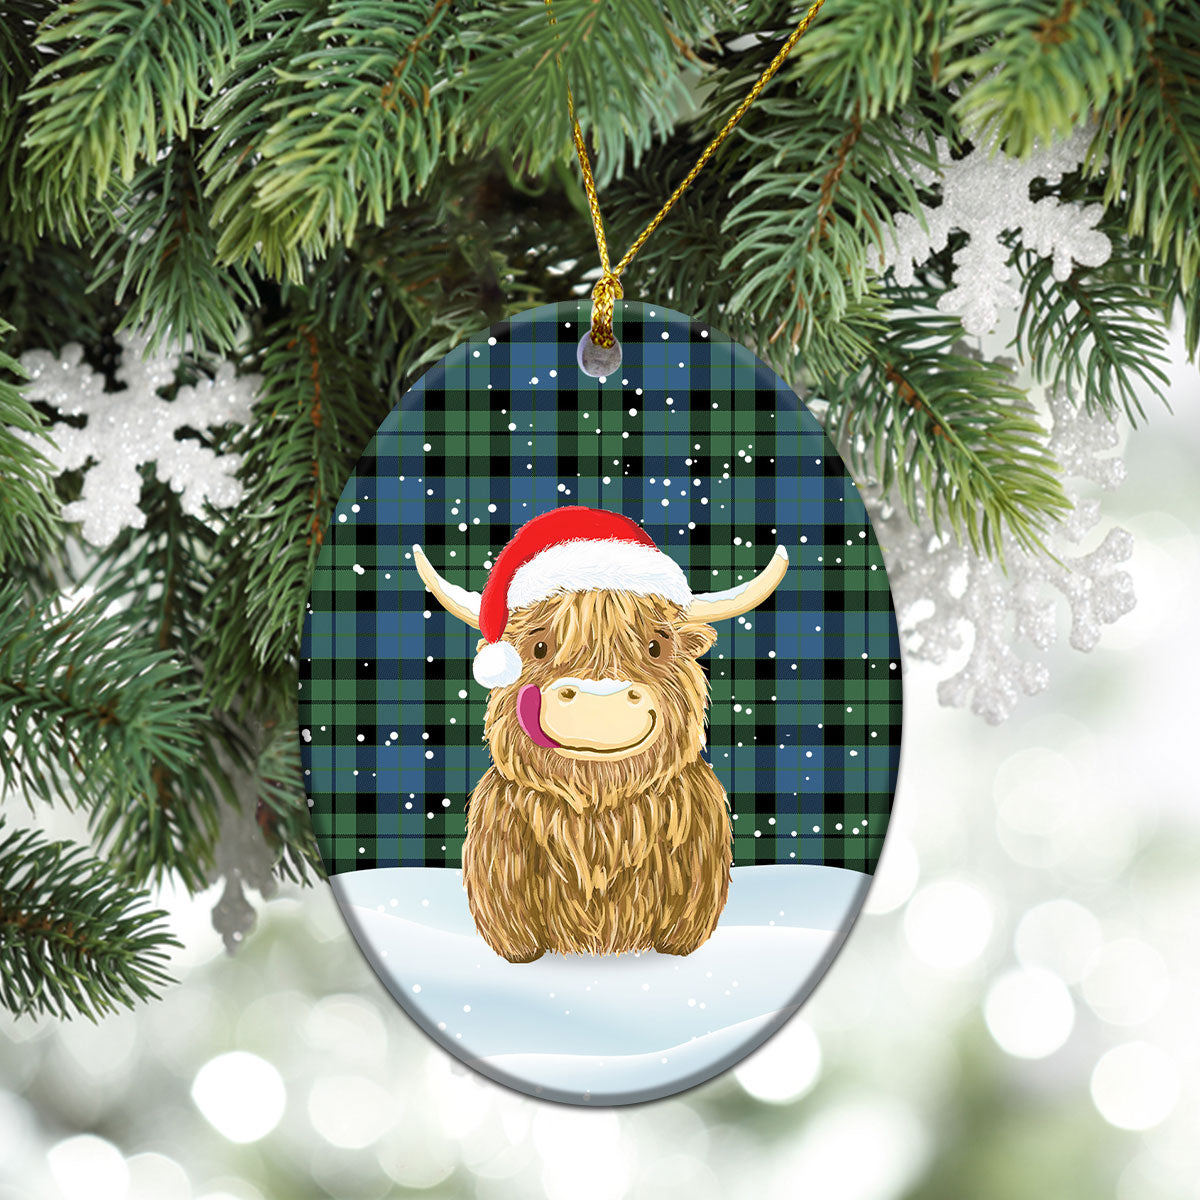 MacKay Ancient Tartan Christmas Ceramic Ornament - Highland Cows Style